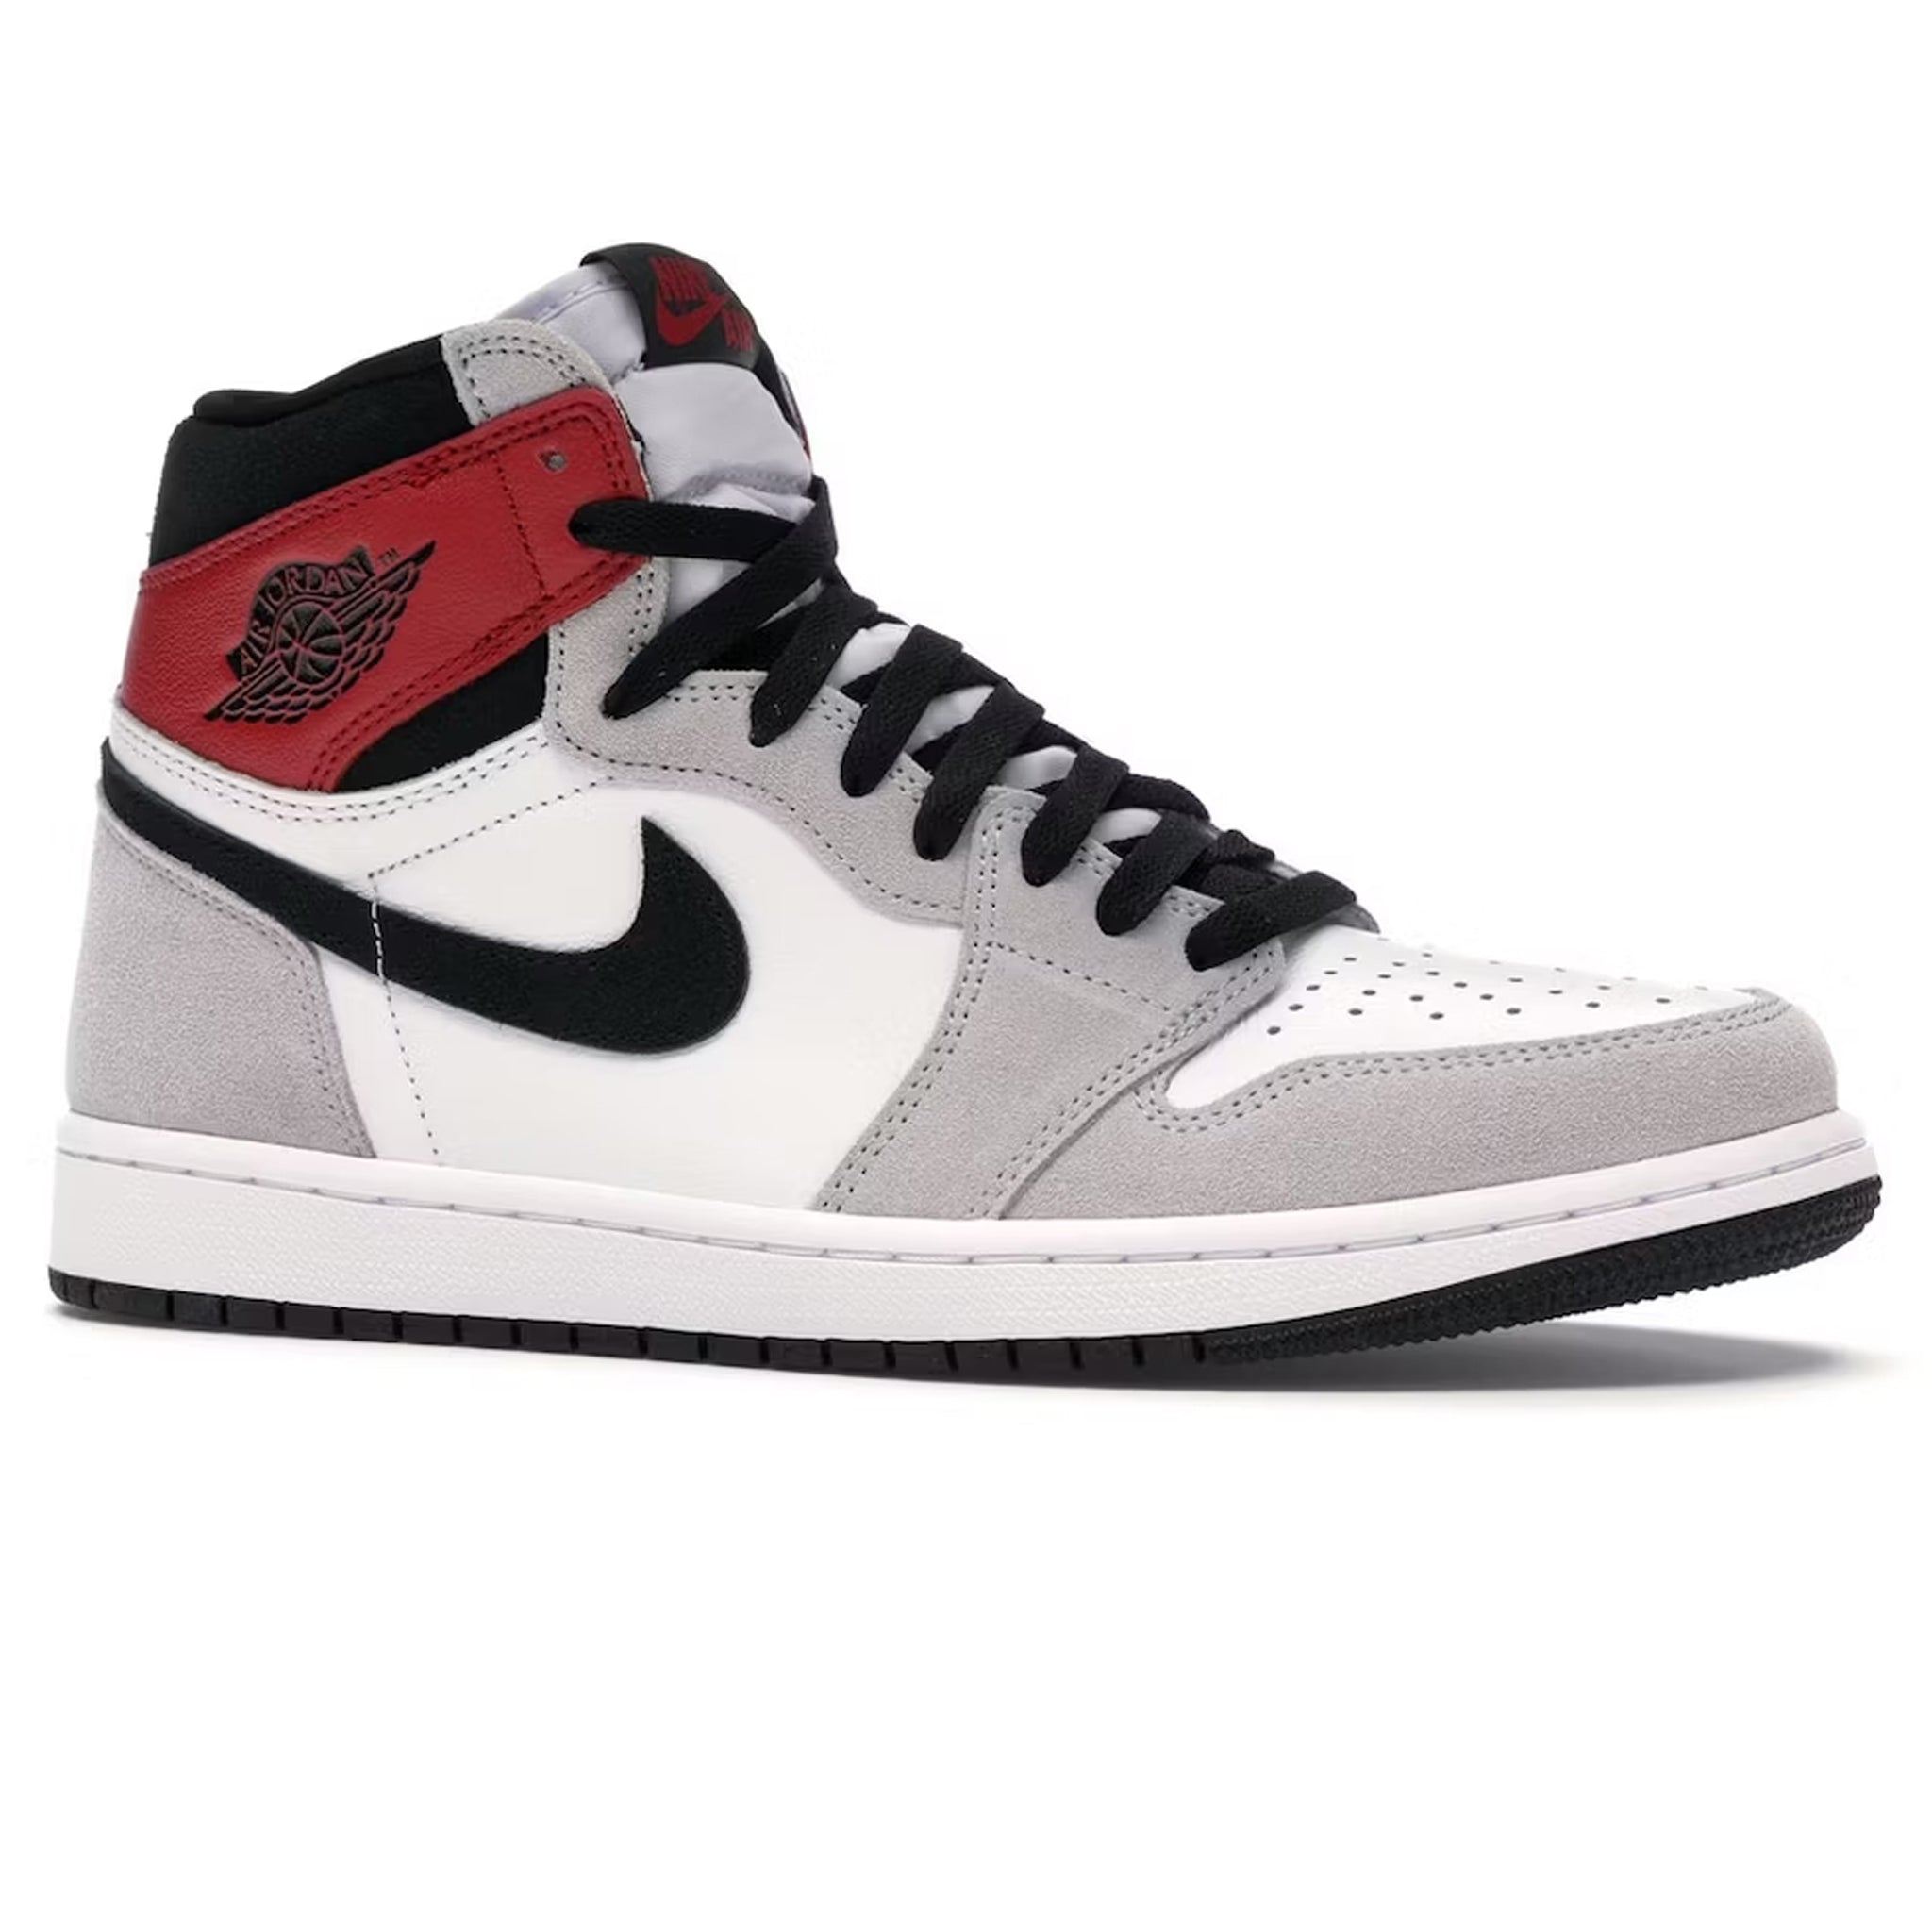 Front view of Air Jordan 1 High Light Smoke Grey Sneaker 555088-126